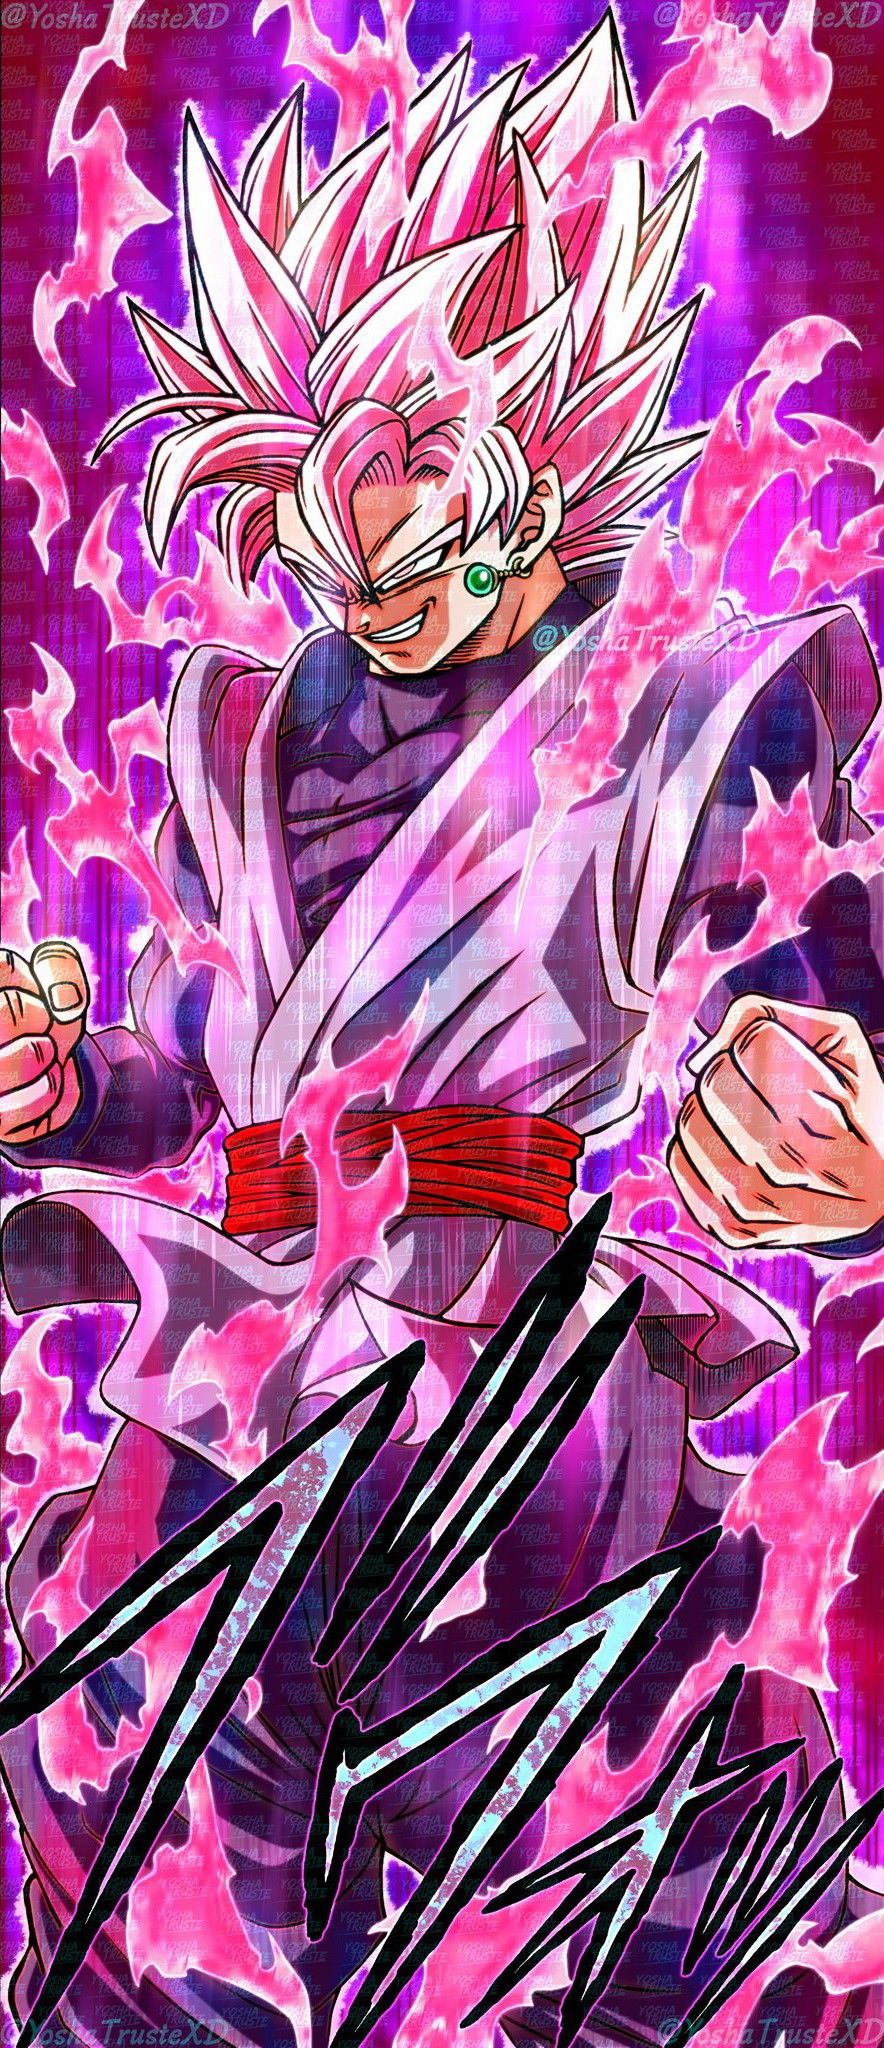 Goku Black ssj Rosé. Dragon ball super manga, Dragon ball artwork, Anime dragon ball